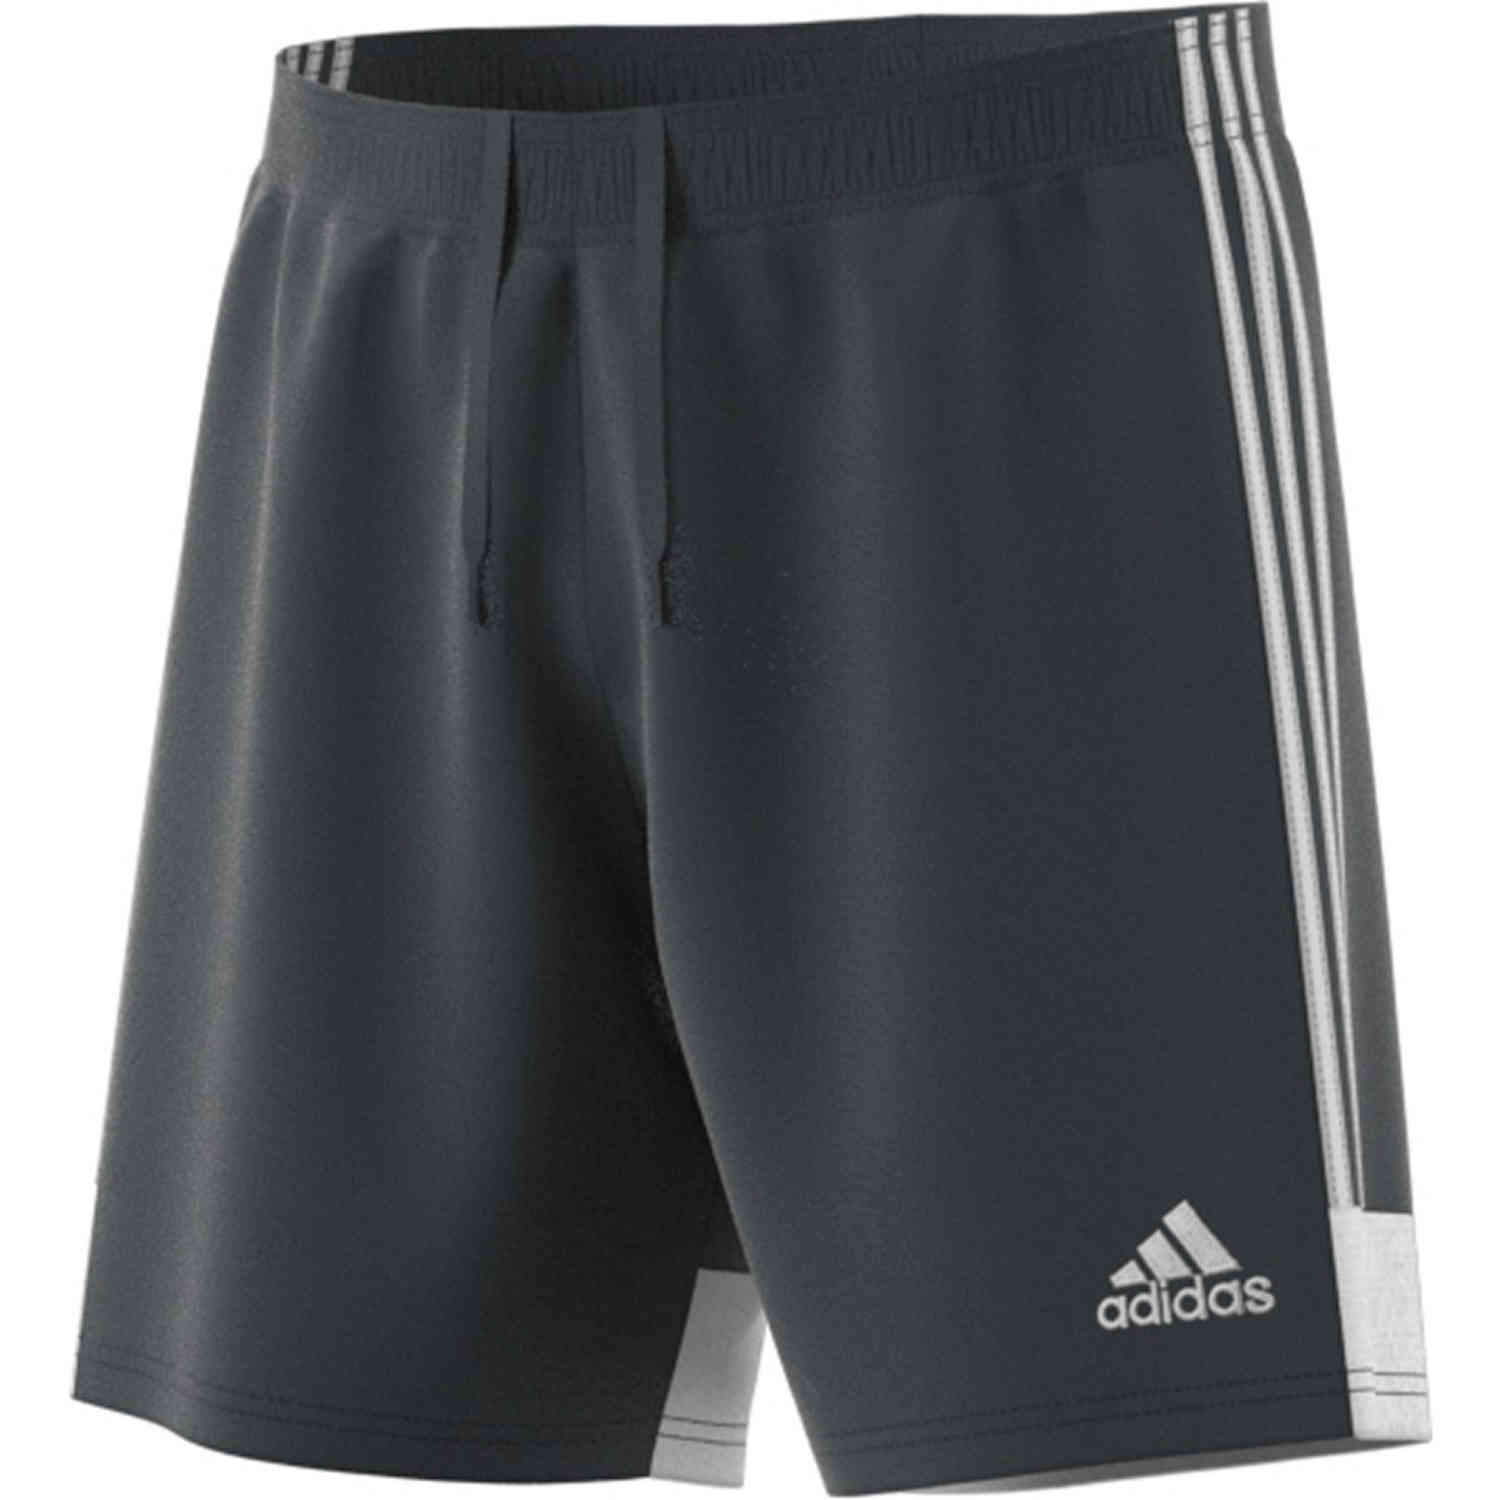 adidas Tastigo 19 Shorts - DGH Grey - SoccerPro